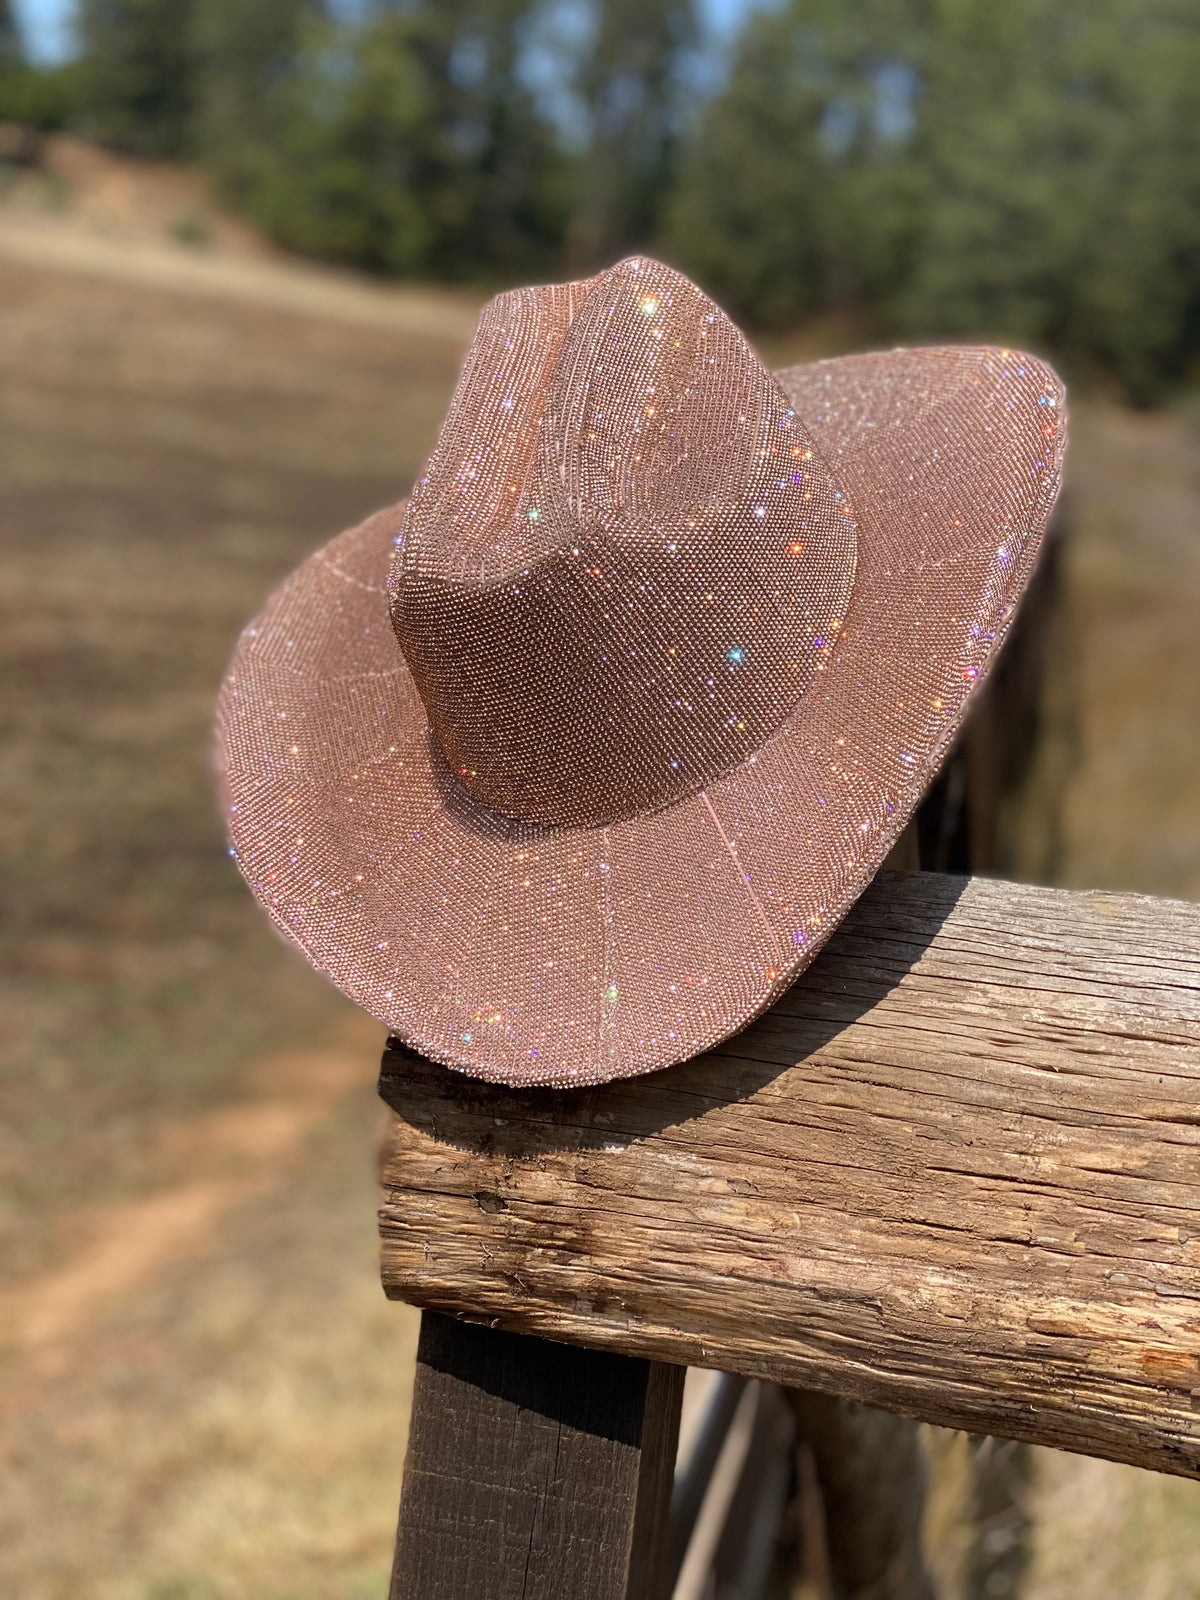 Tennessee Diamond Cowgirl